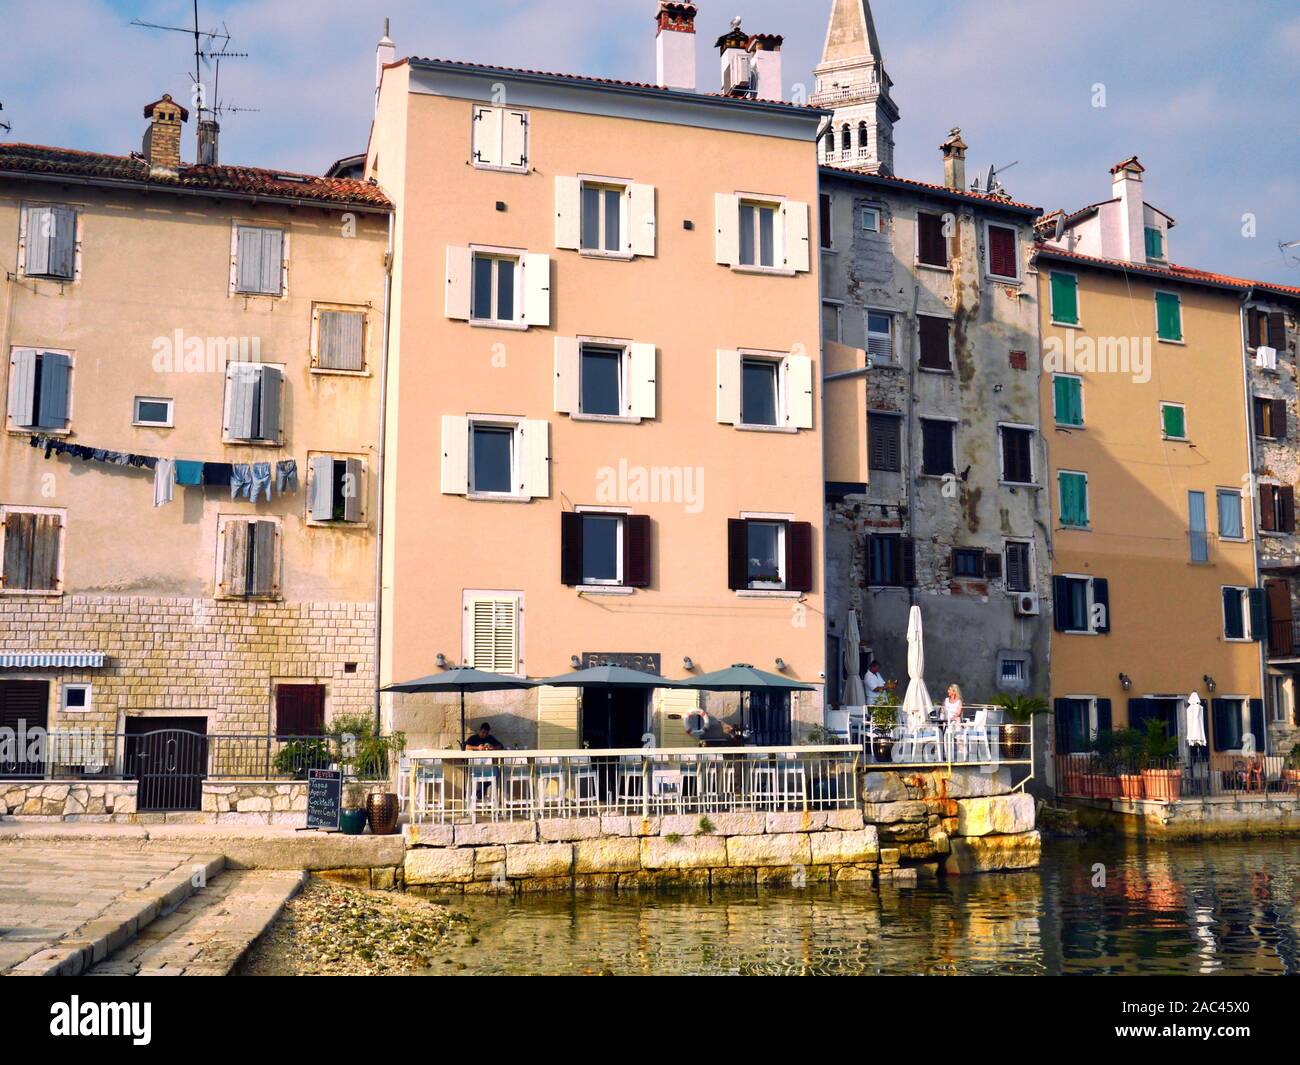 Residential buildings in beautiful medieval town of Rovinj in Croatia, located on Adriatic Sea, Istria Peninsula. Stock Photo